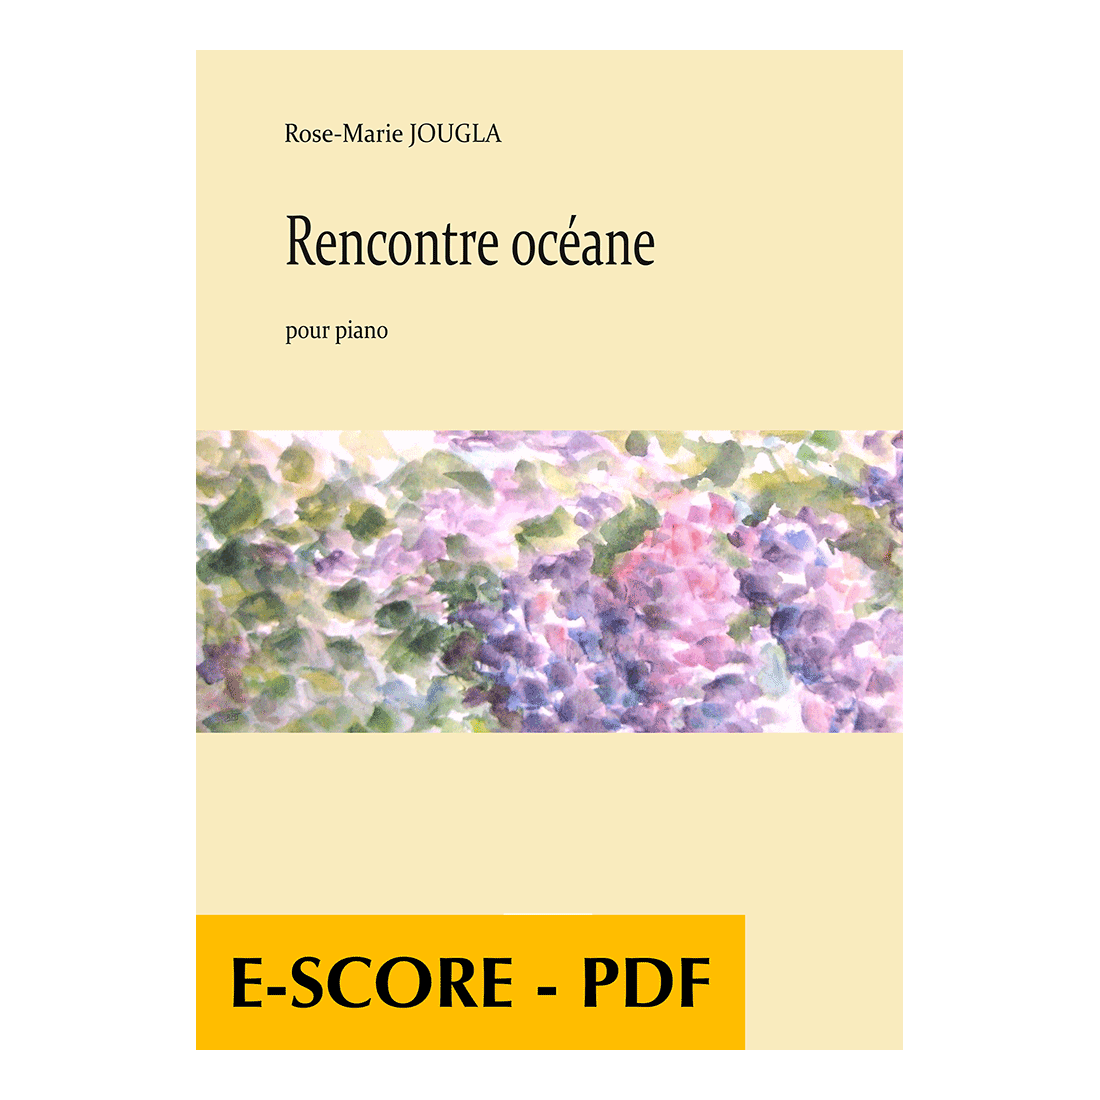 Rencontre océane für Klavier - E-score PDF